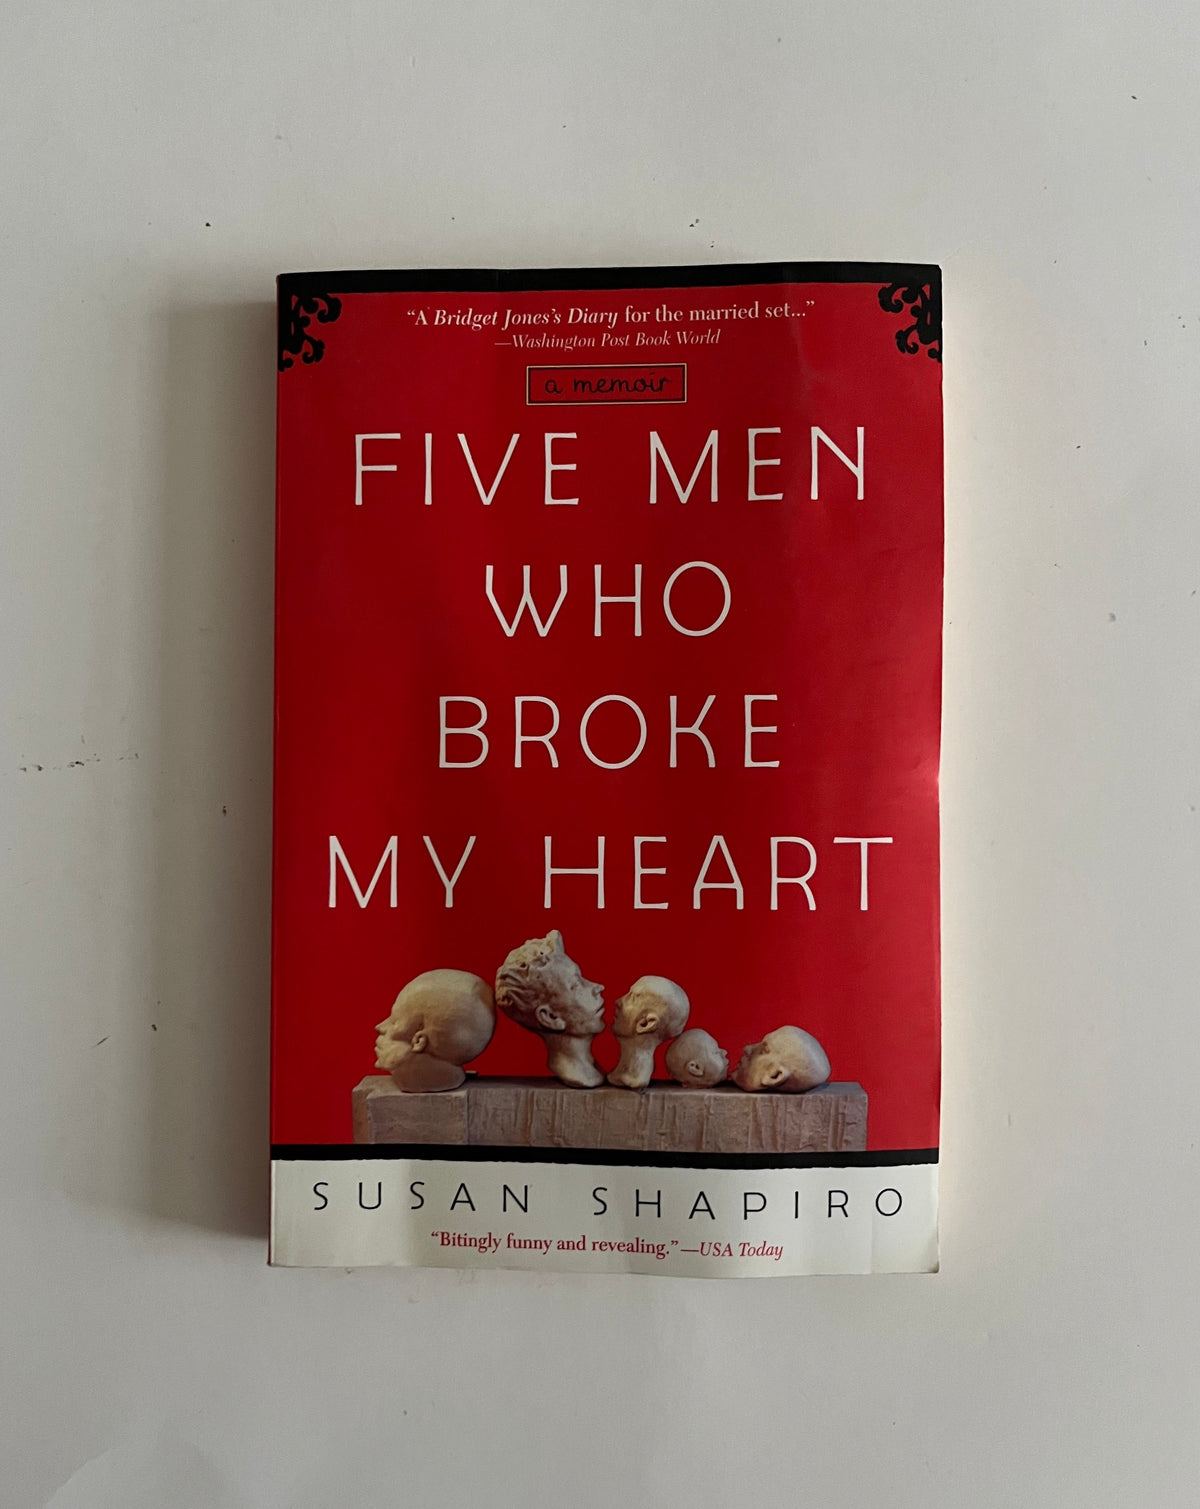 Five Men Who Broke My Heart by Susan Shapiro